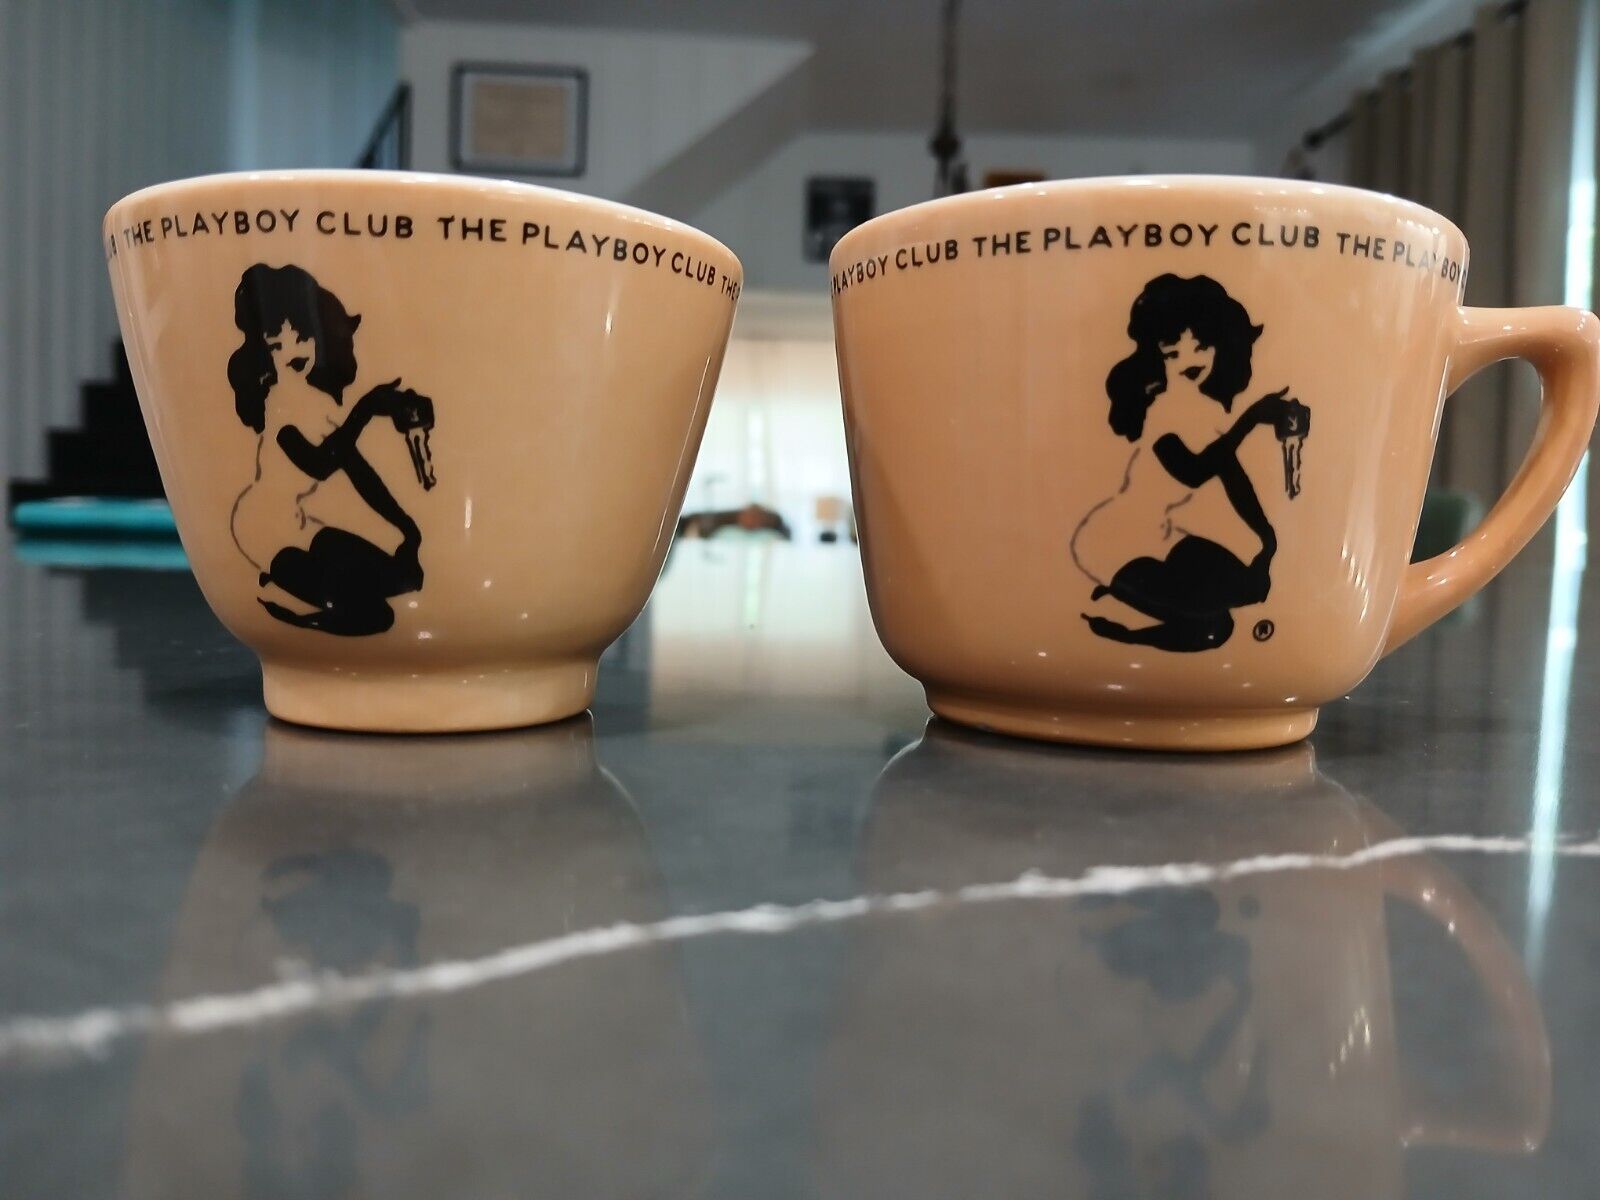 Playboy Club Porcelain Cups